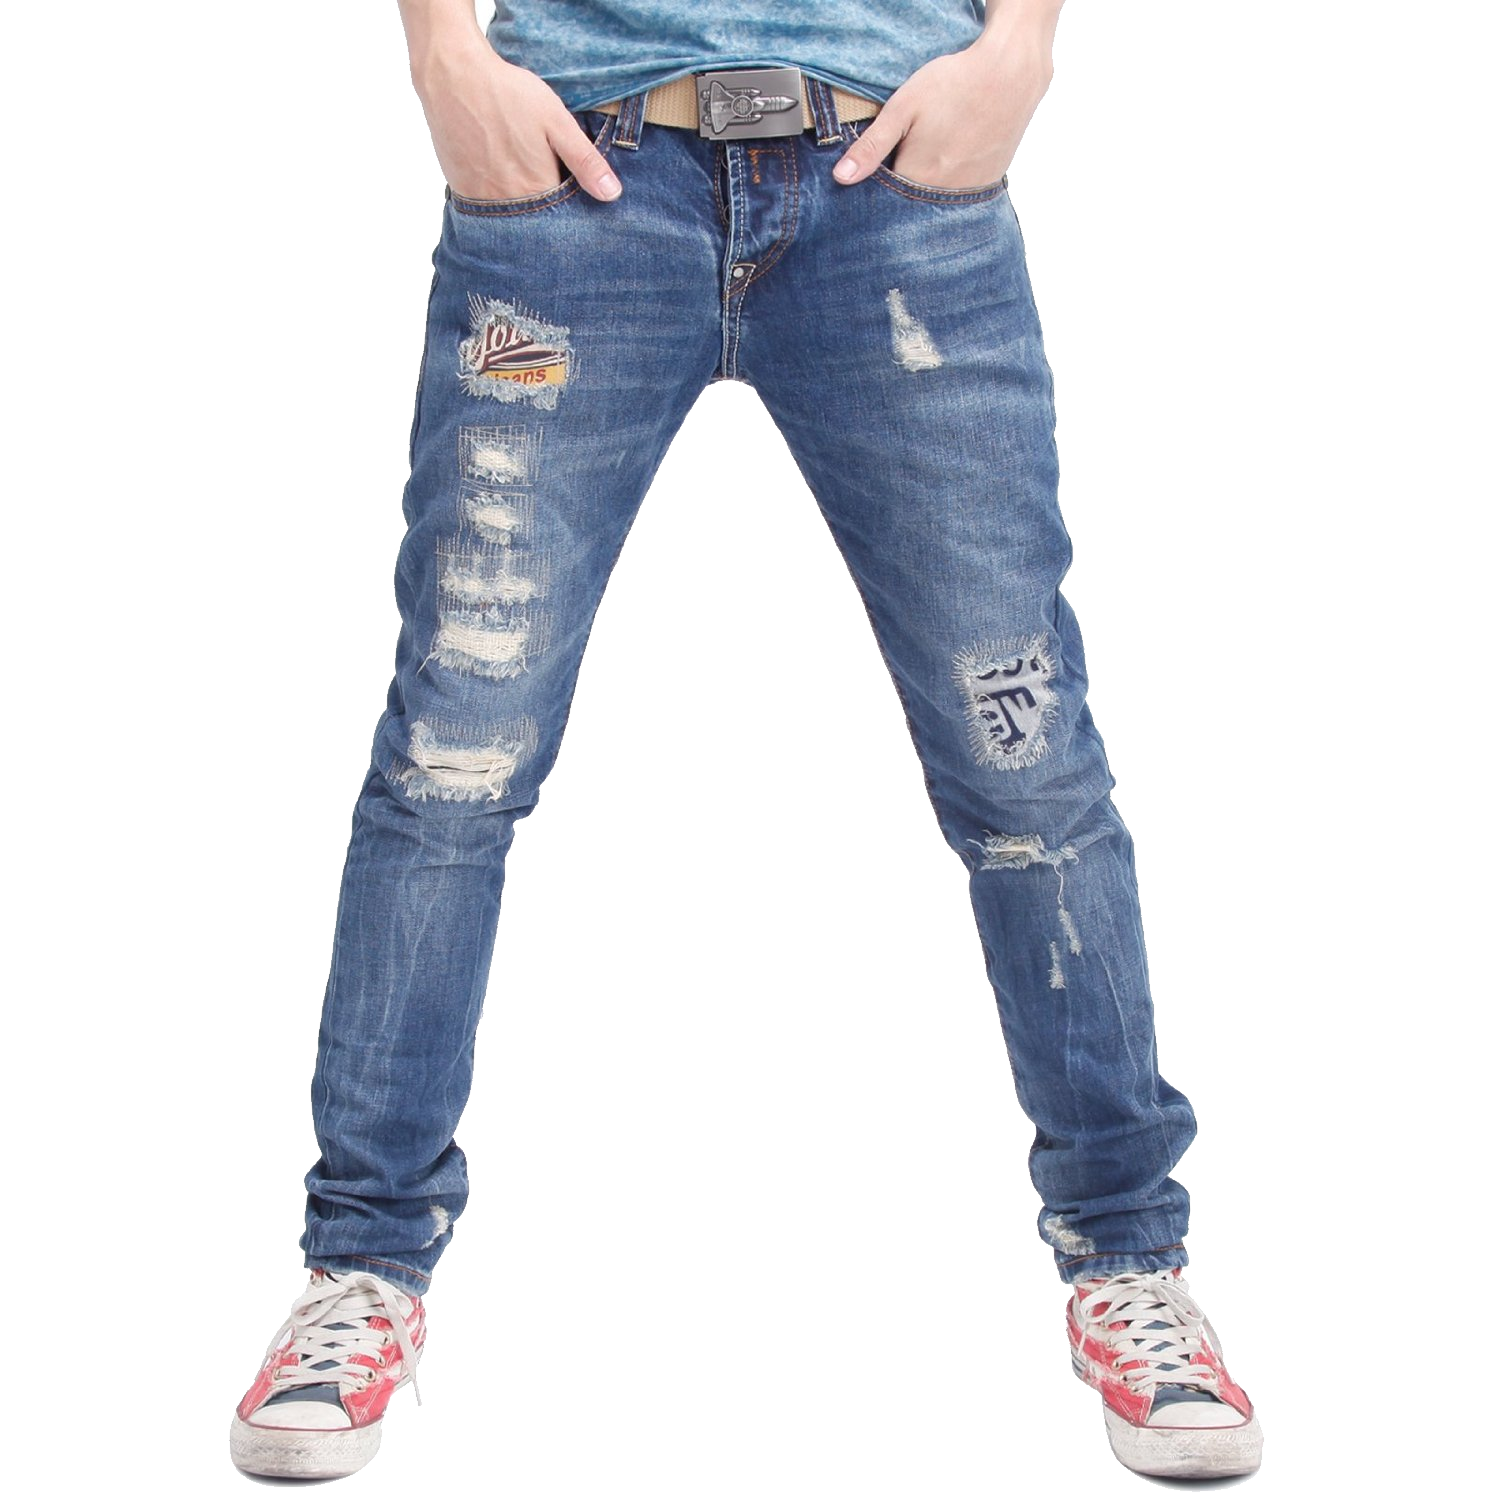 Men Jeans PNG Transparent Images PNG All